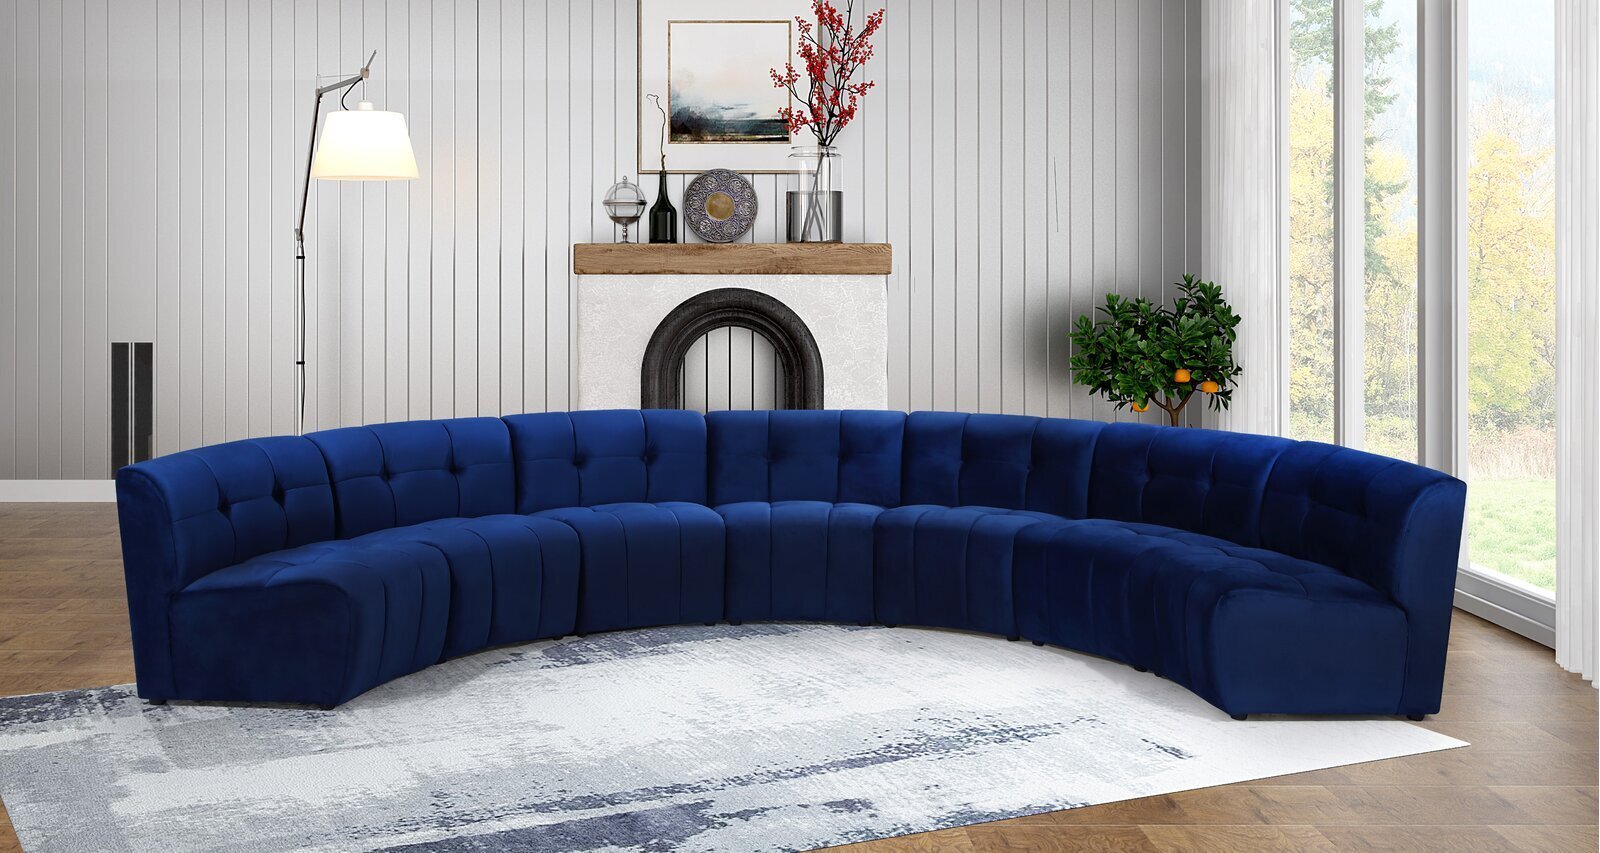 Curved Modular Sectional Sofa